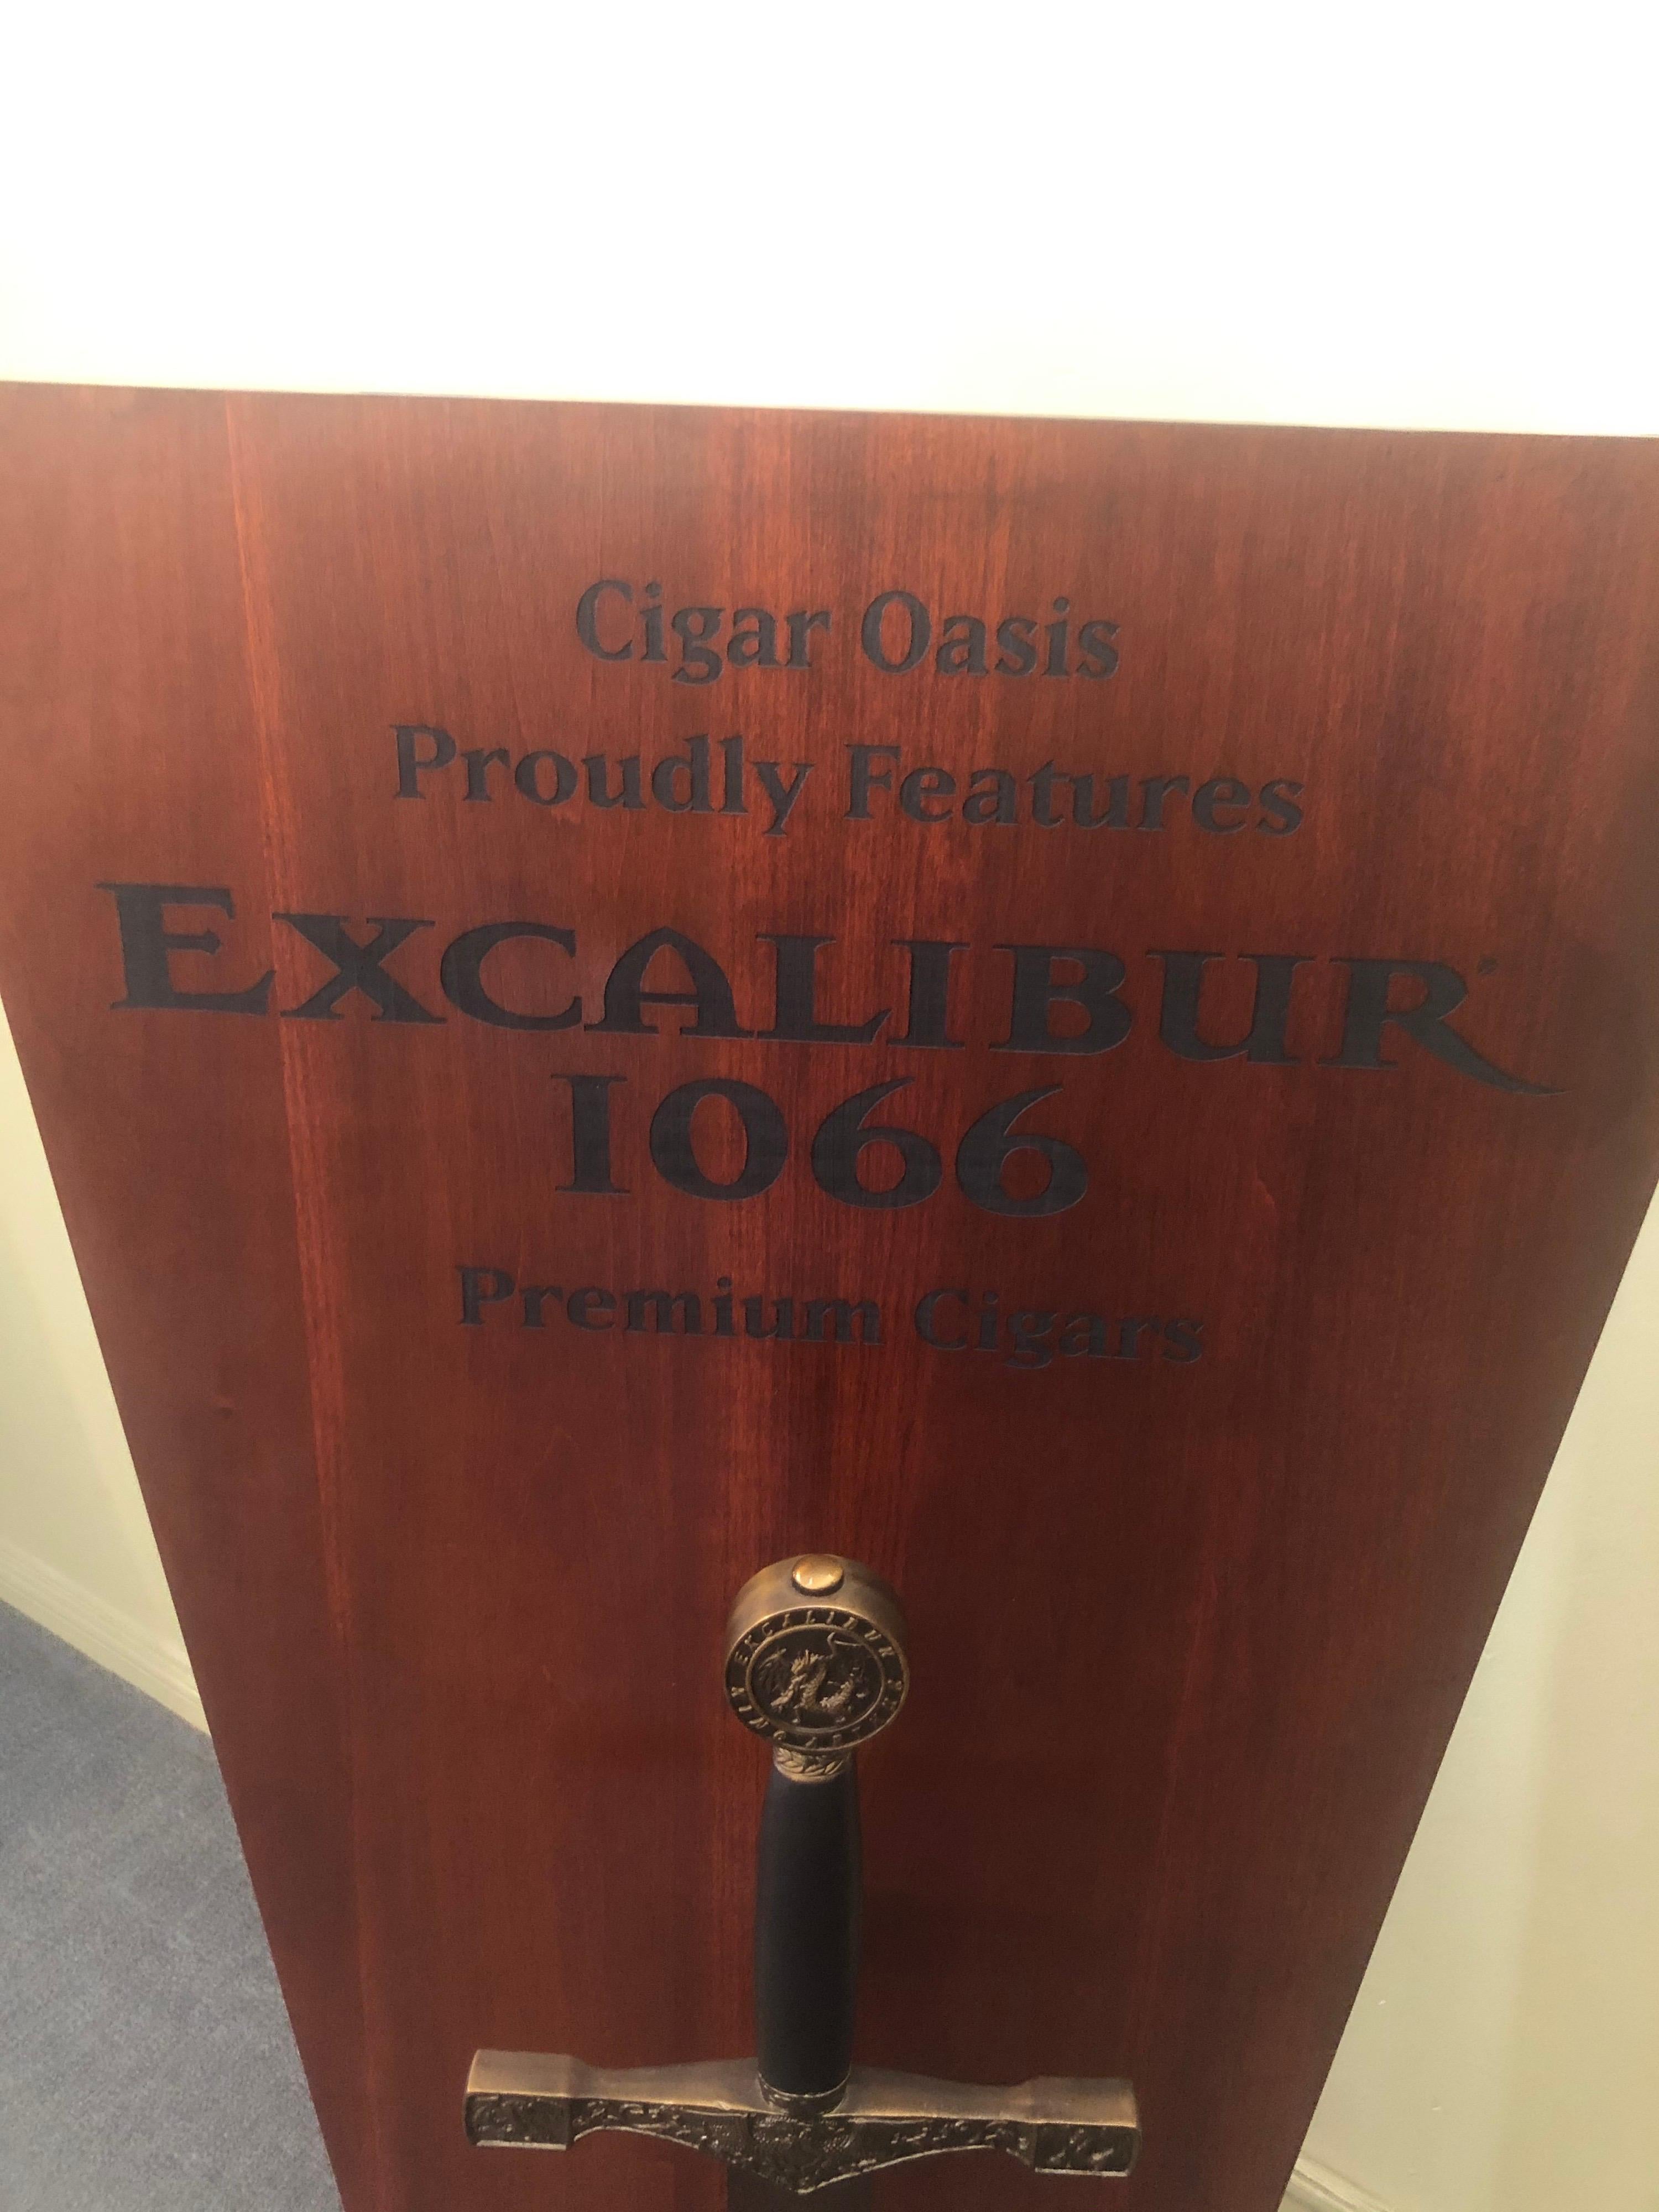 Plastic Excalibur Cigar Store Display 